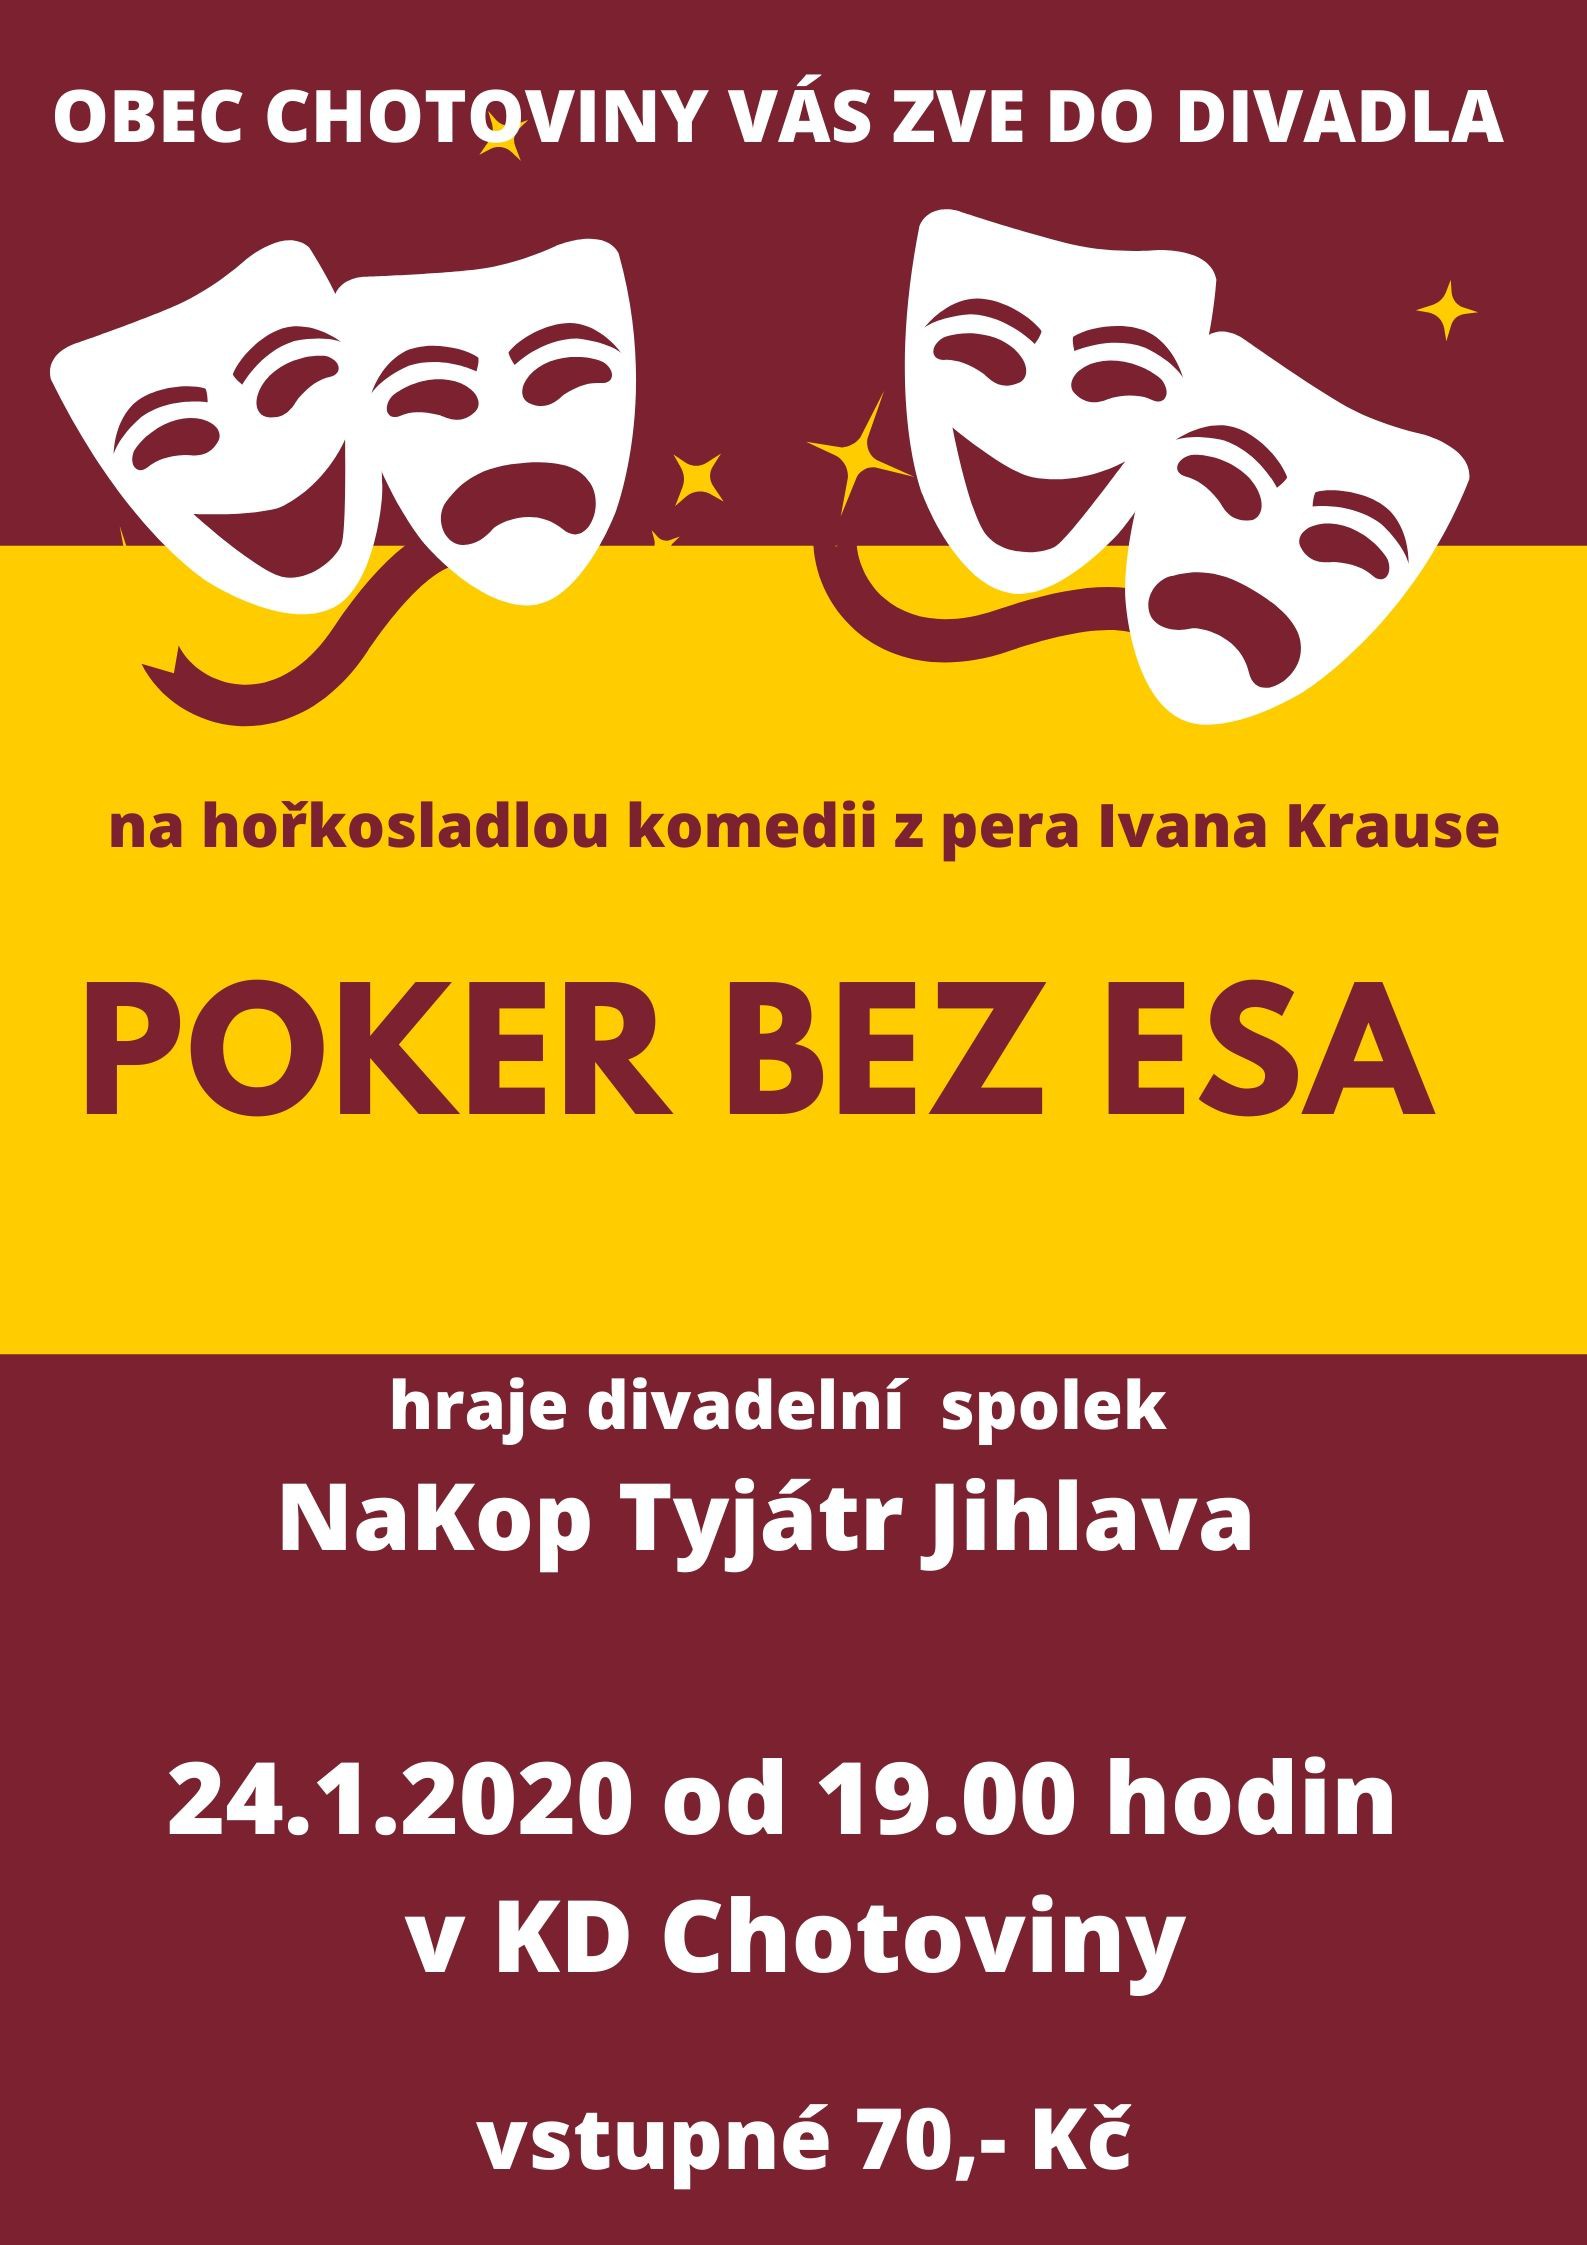 nakop-tyjatr-jihlava-24.1.2020-plakat.jpg